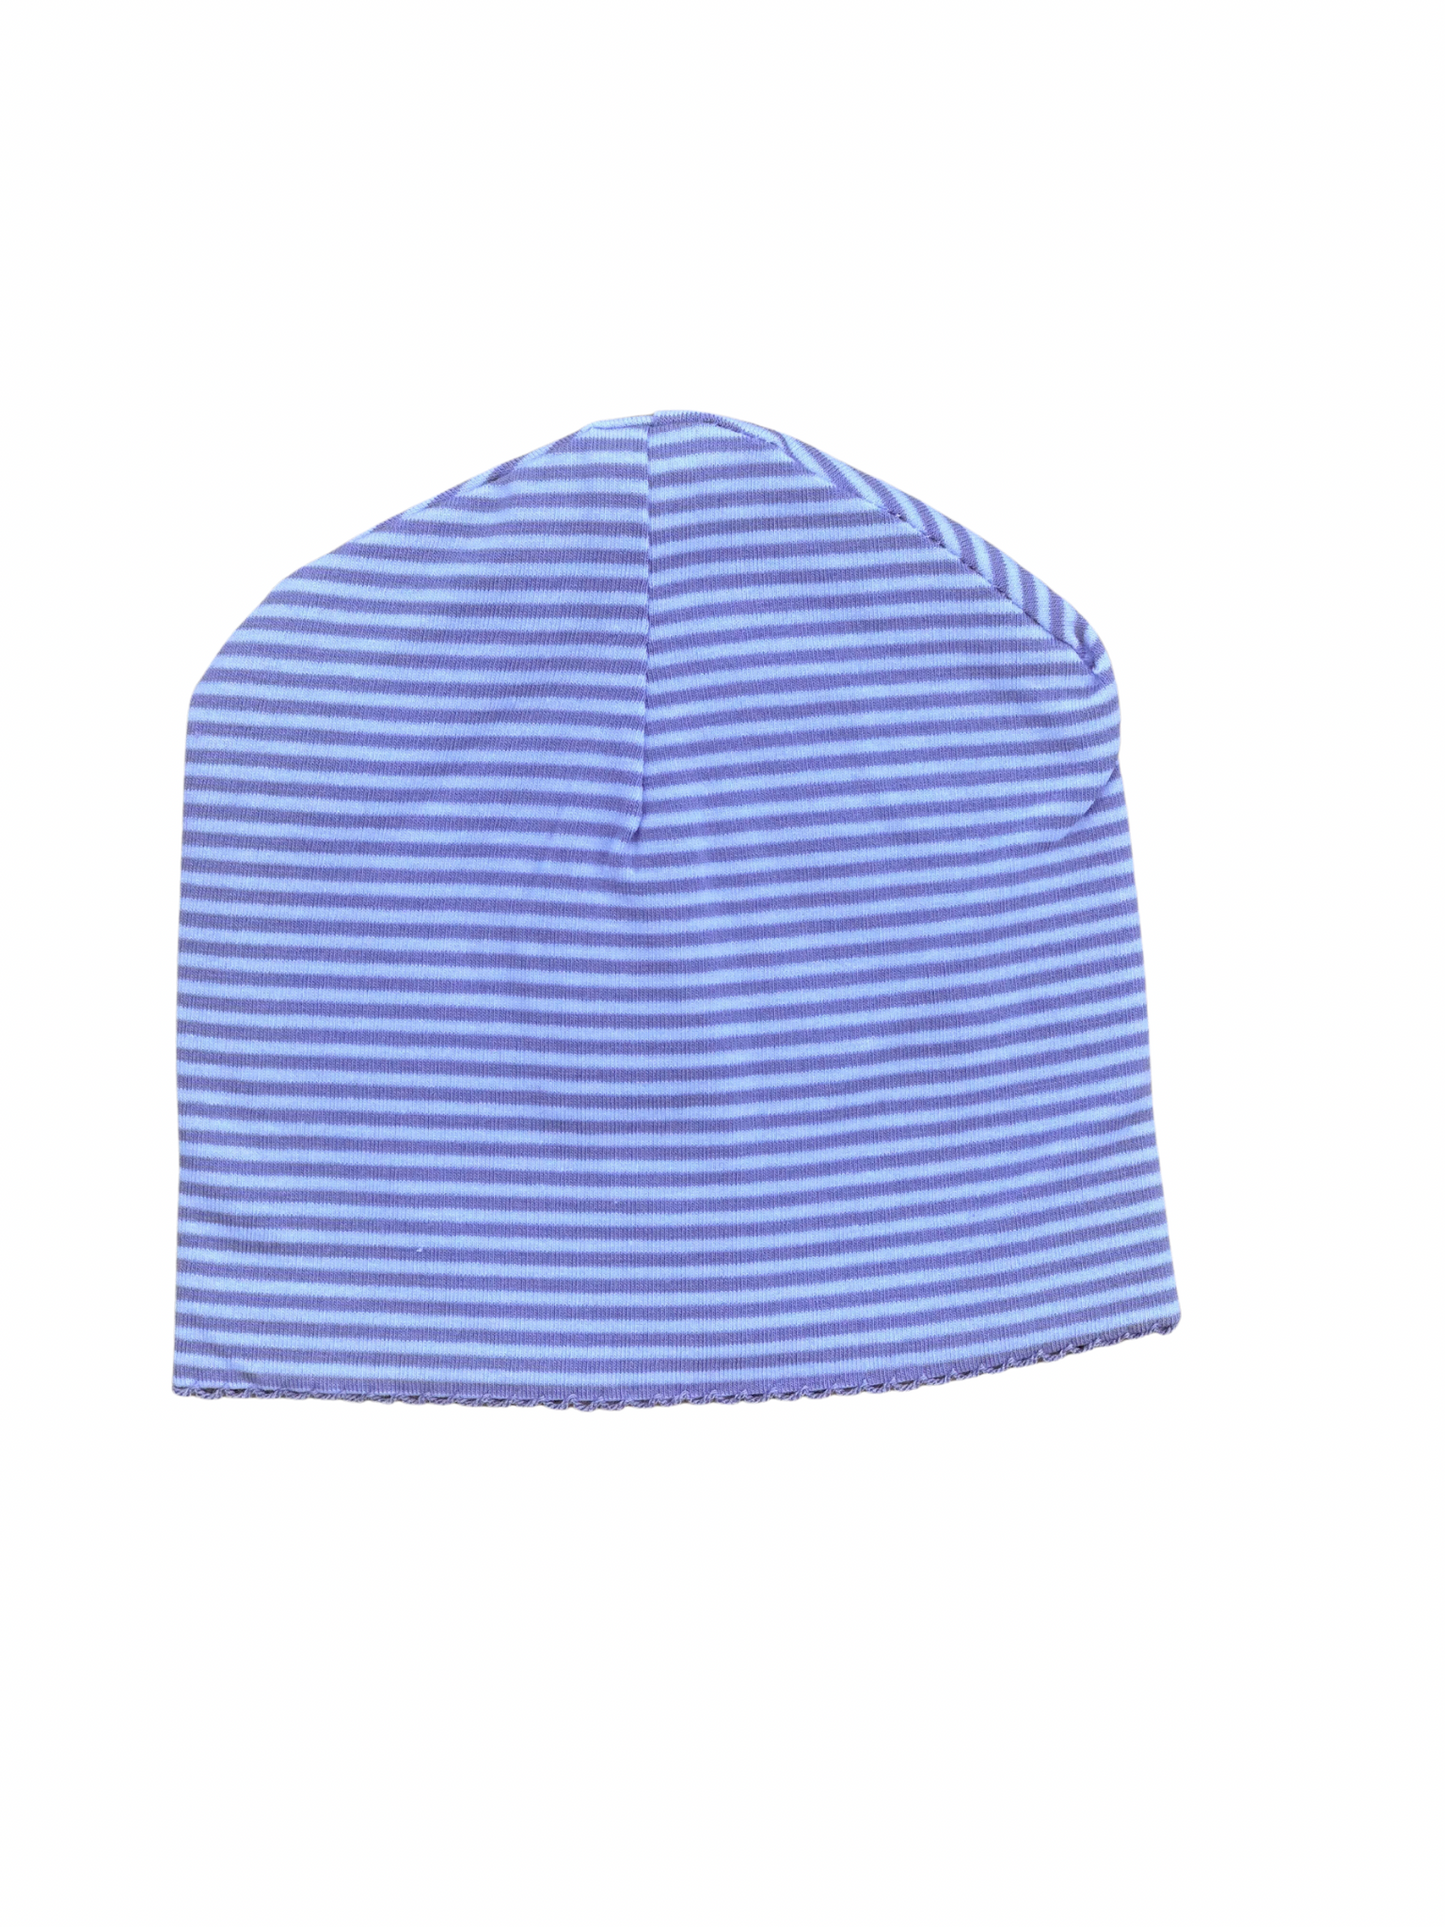 Infant Hats - Stripe